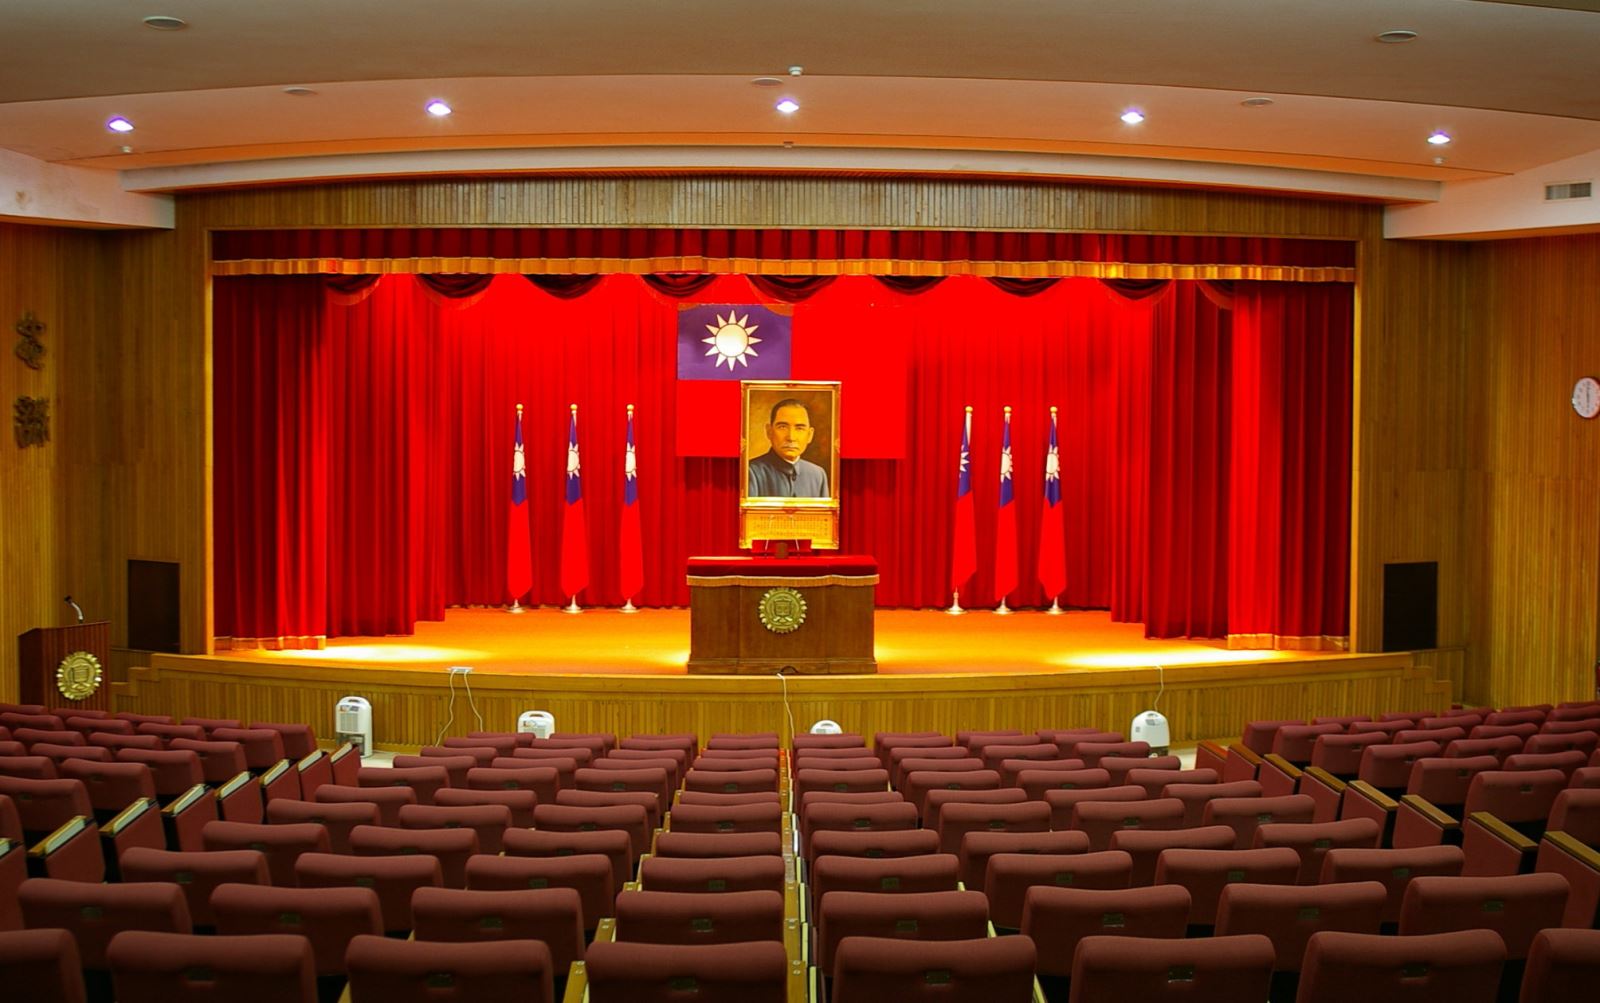 Multi-purpose assembly hall